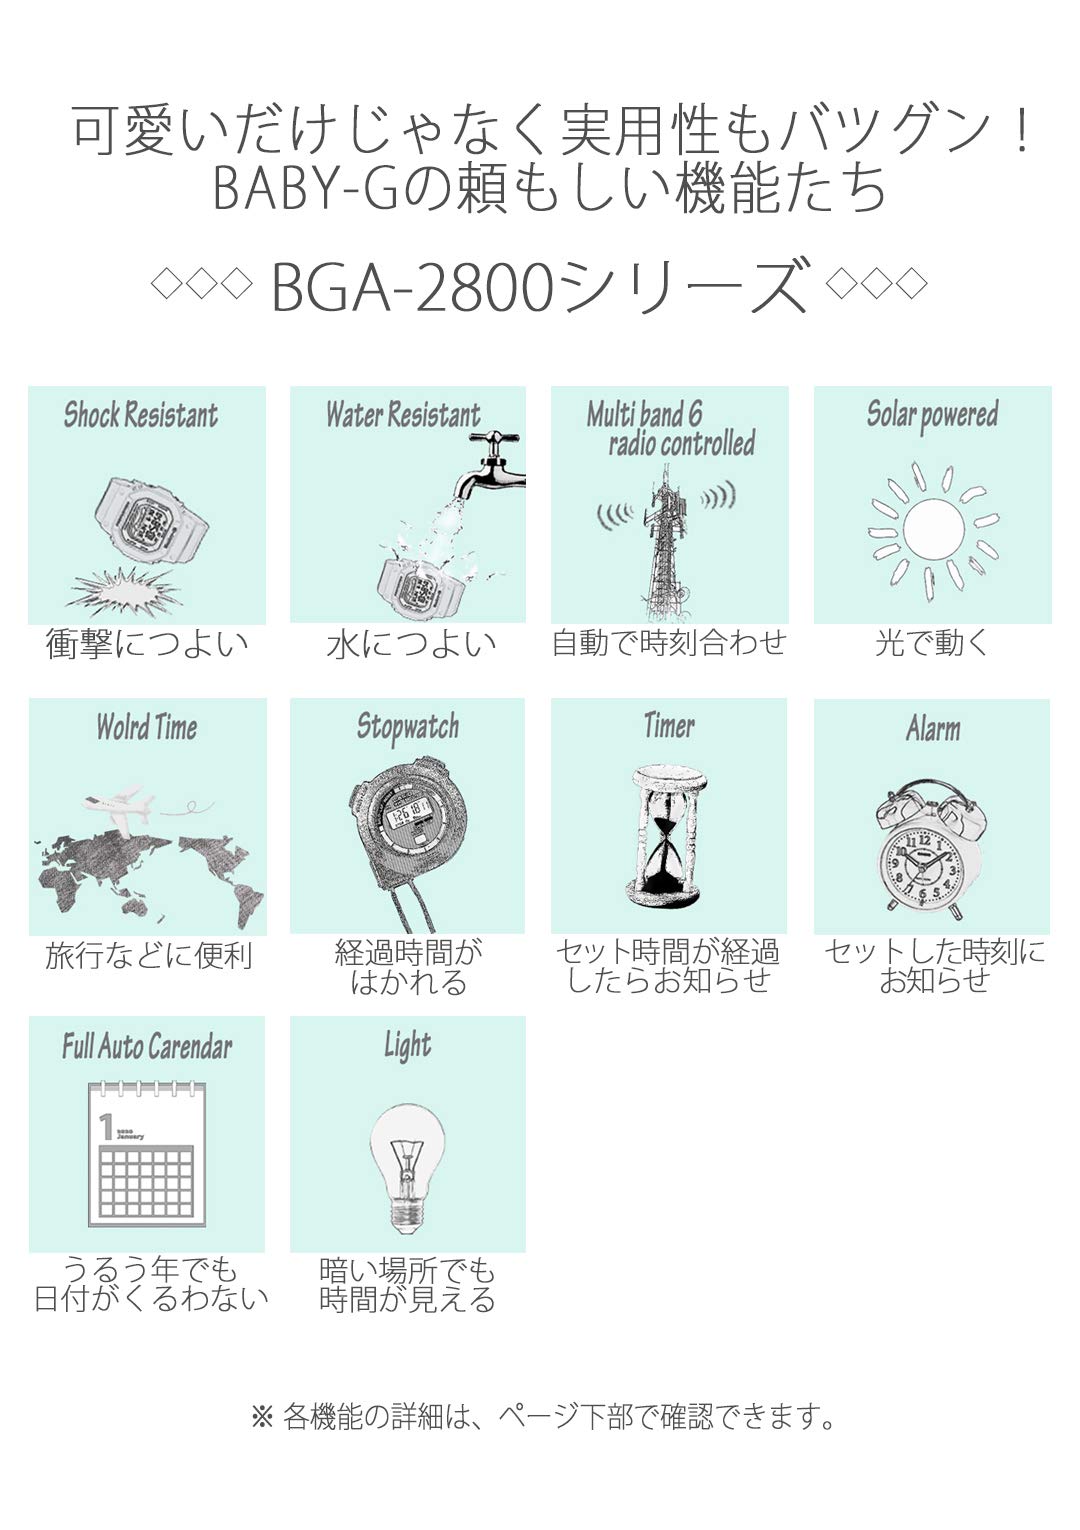 Casio] Watch Baby-G [Japan Import] Radio Solar BGA-2800-4AJF Pink